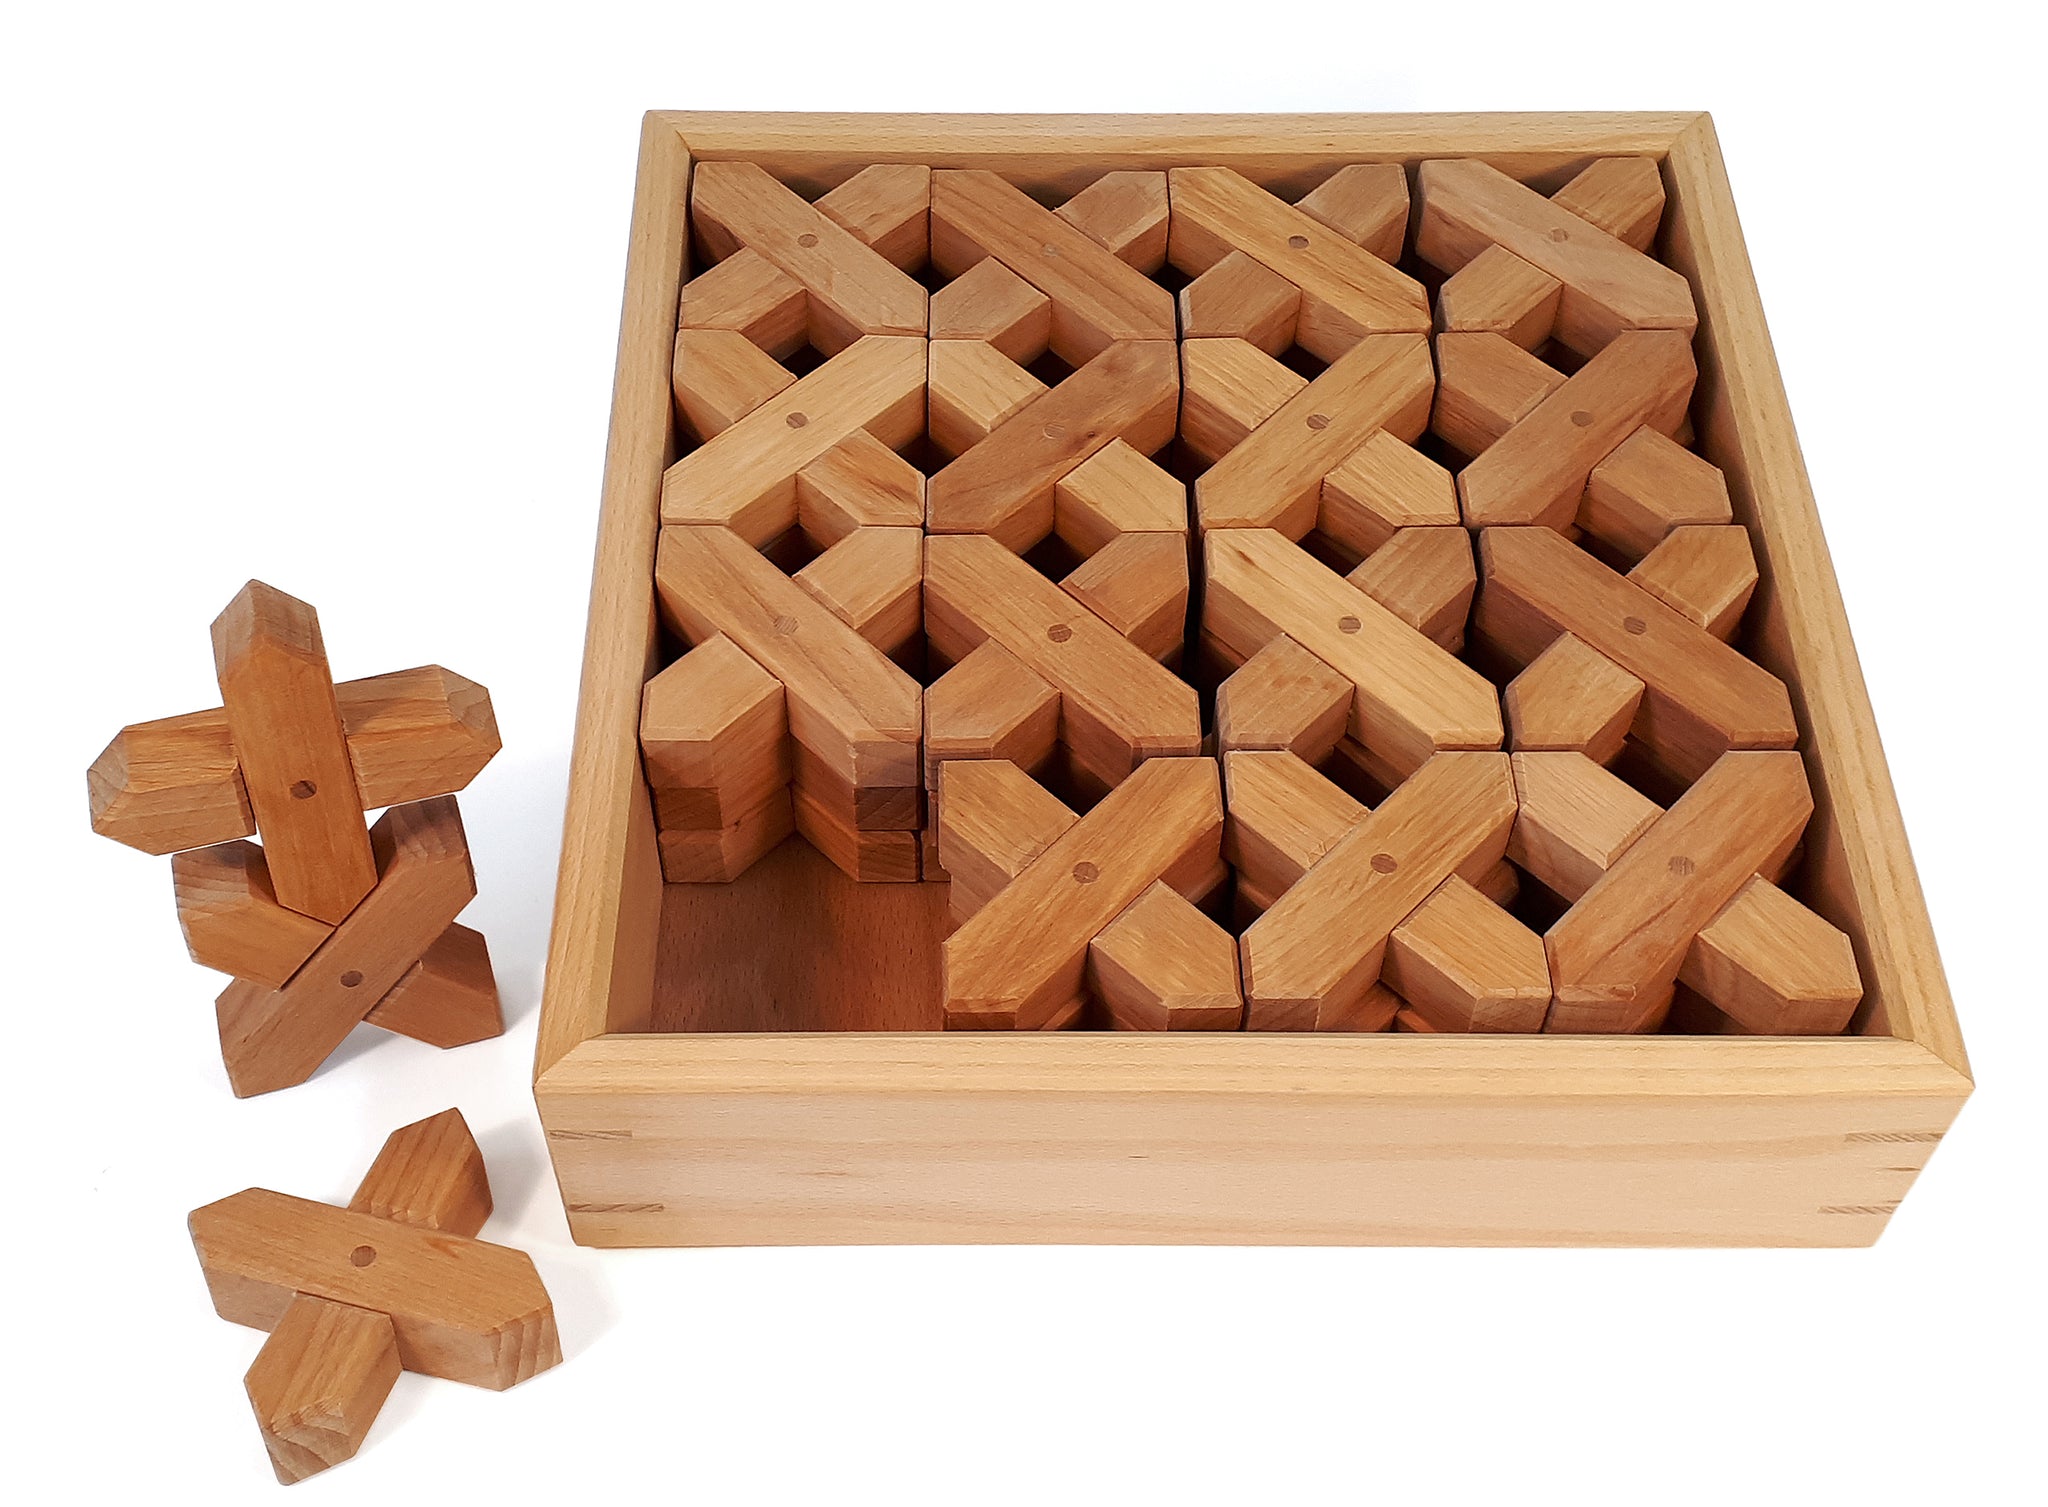 Bauspiel X-blocks 48 parts in a wooden tray.